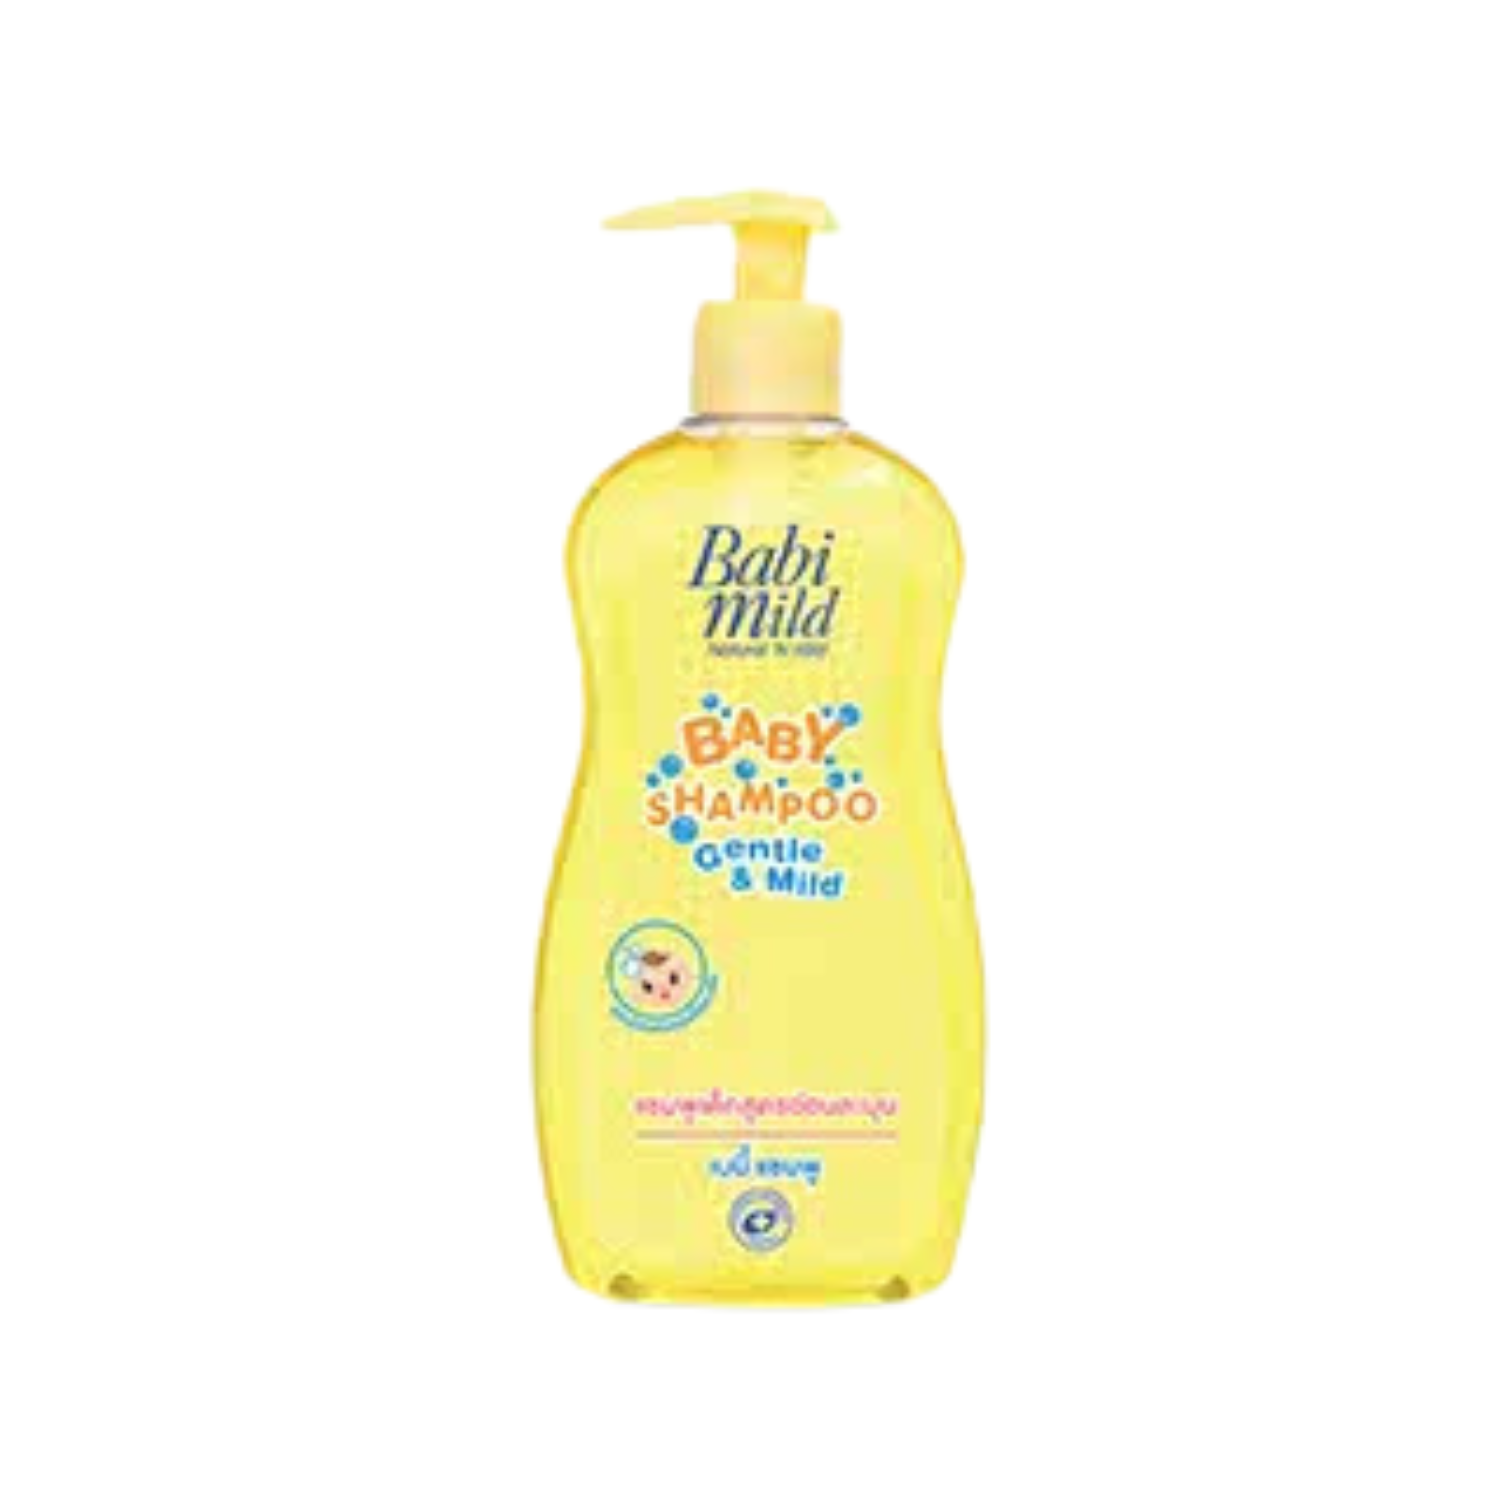 baby-mild-shampoo-gentle-mild-400ml